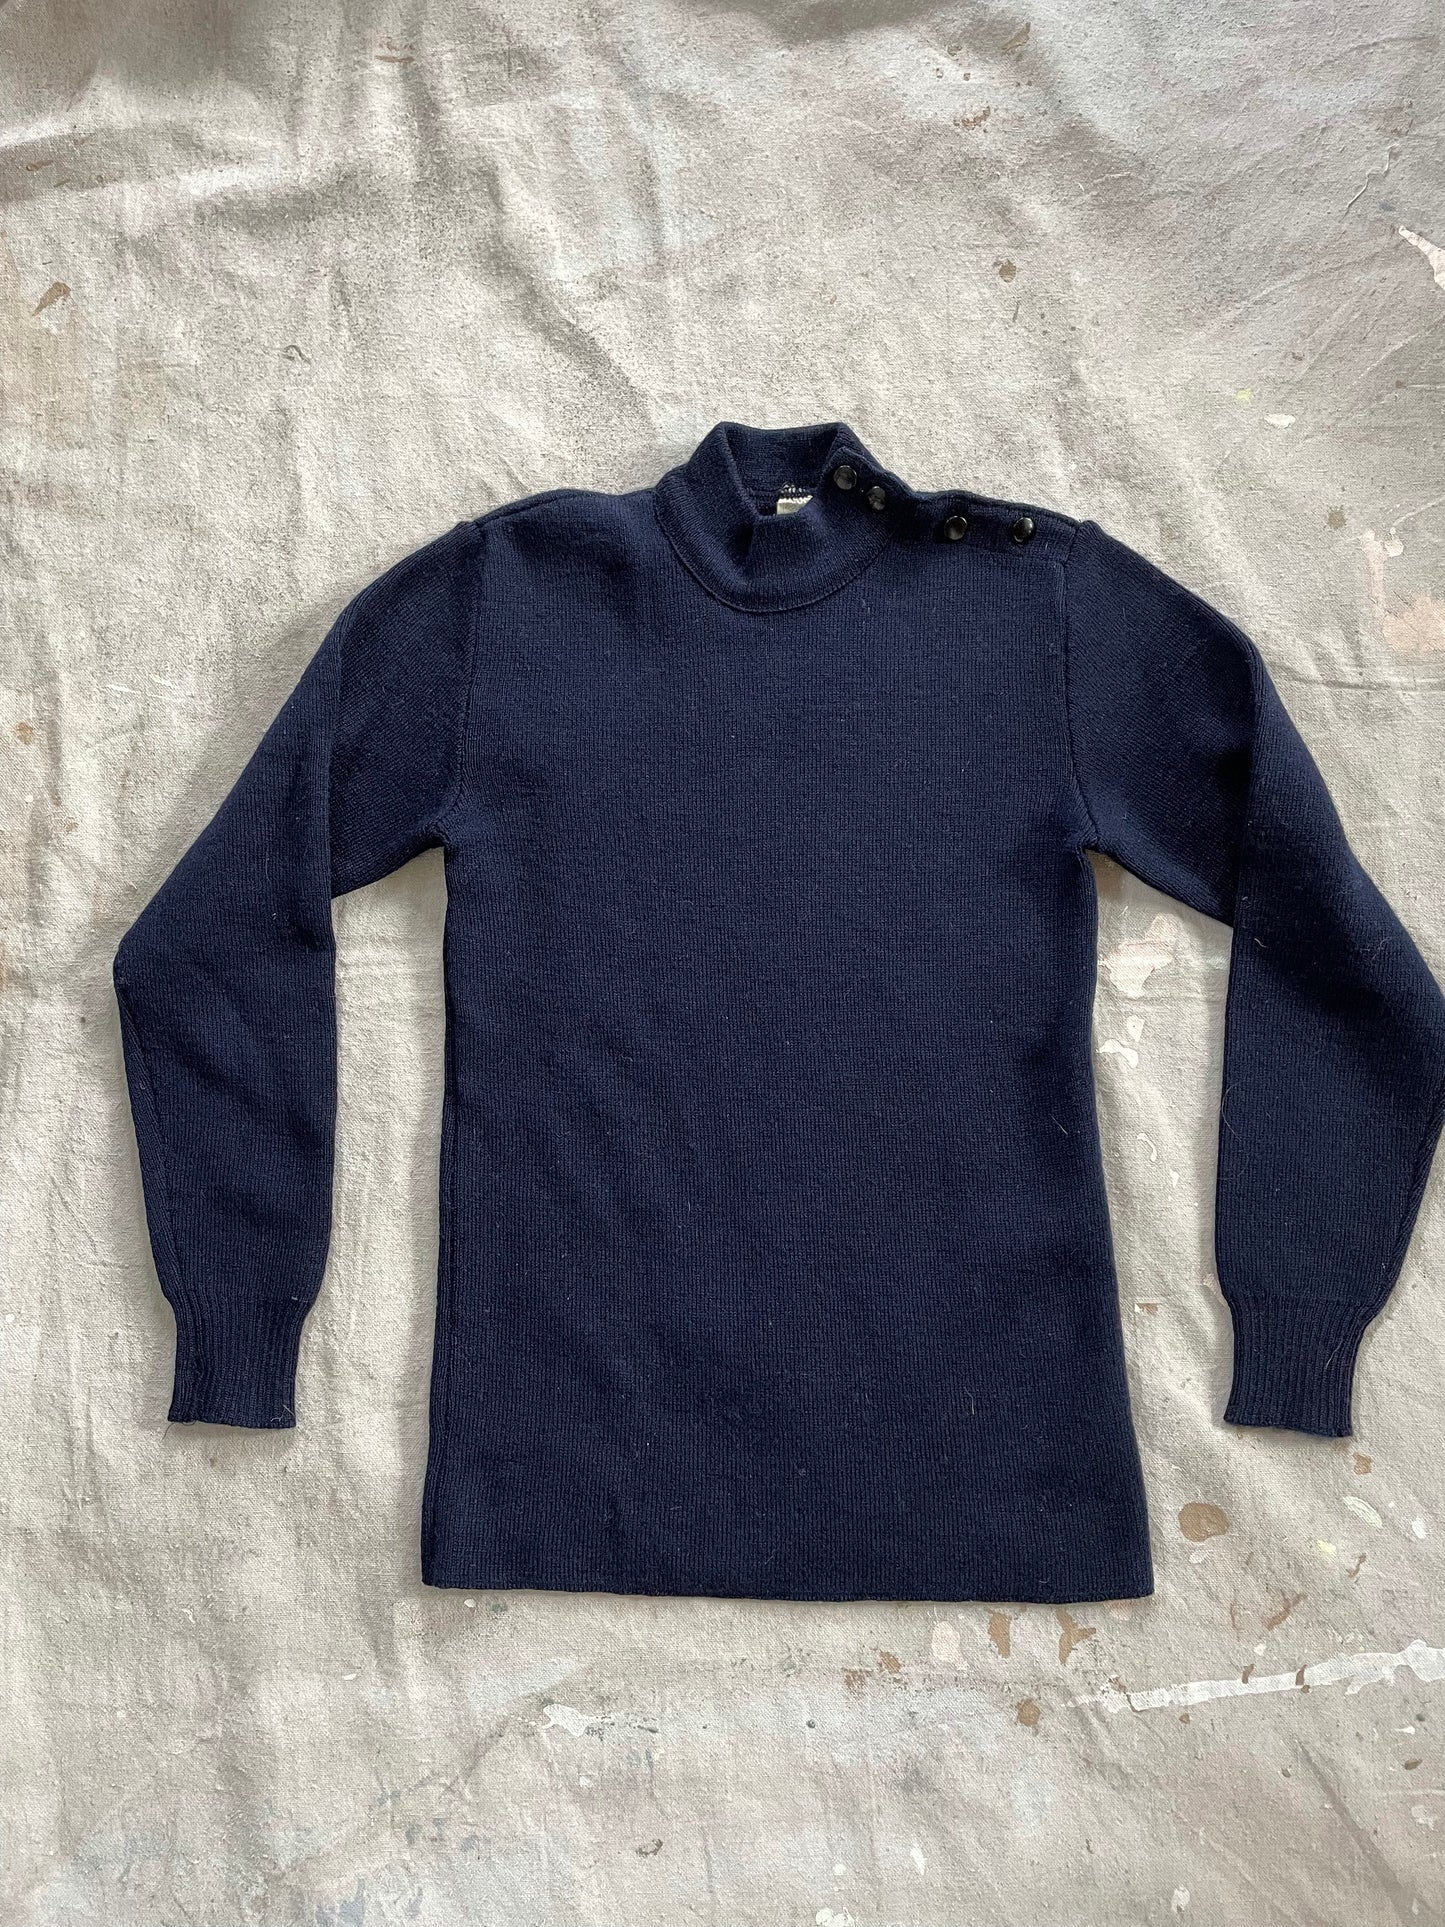 Navy Blue Mock Neck Sweater